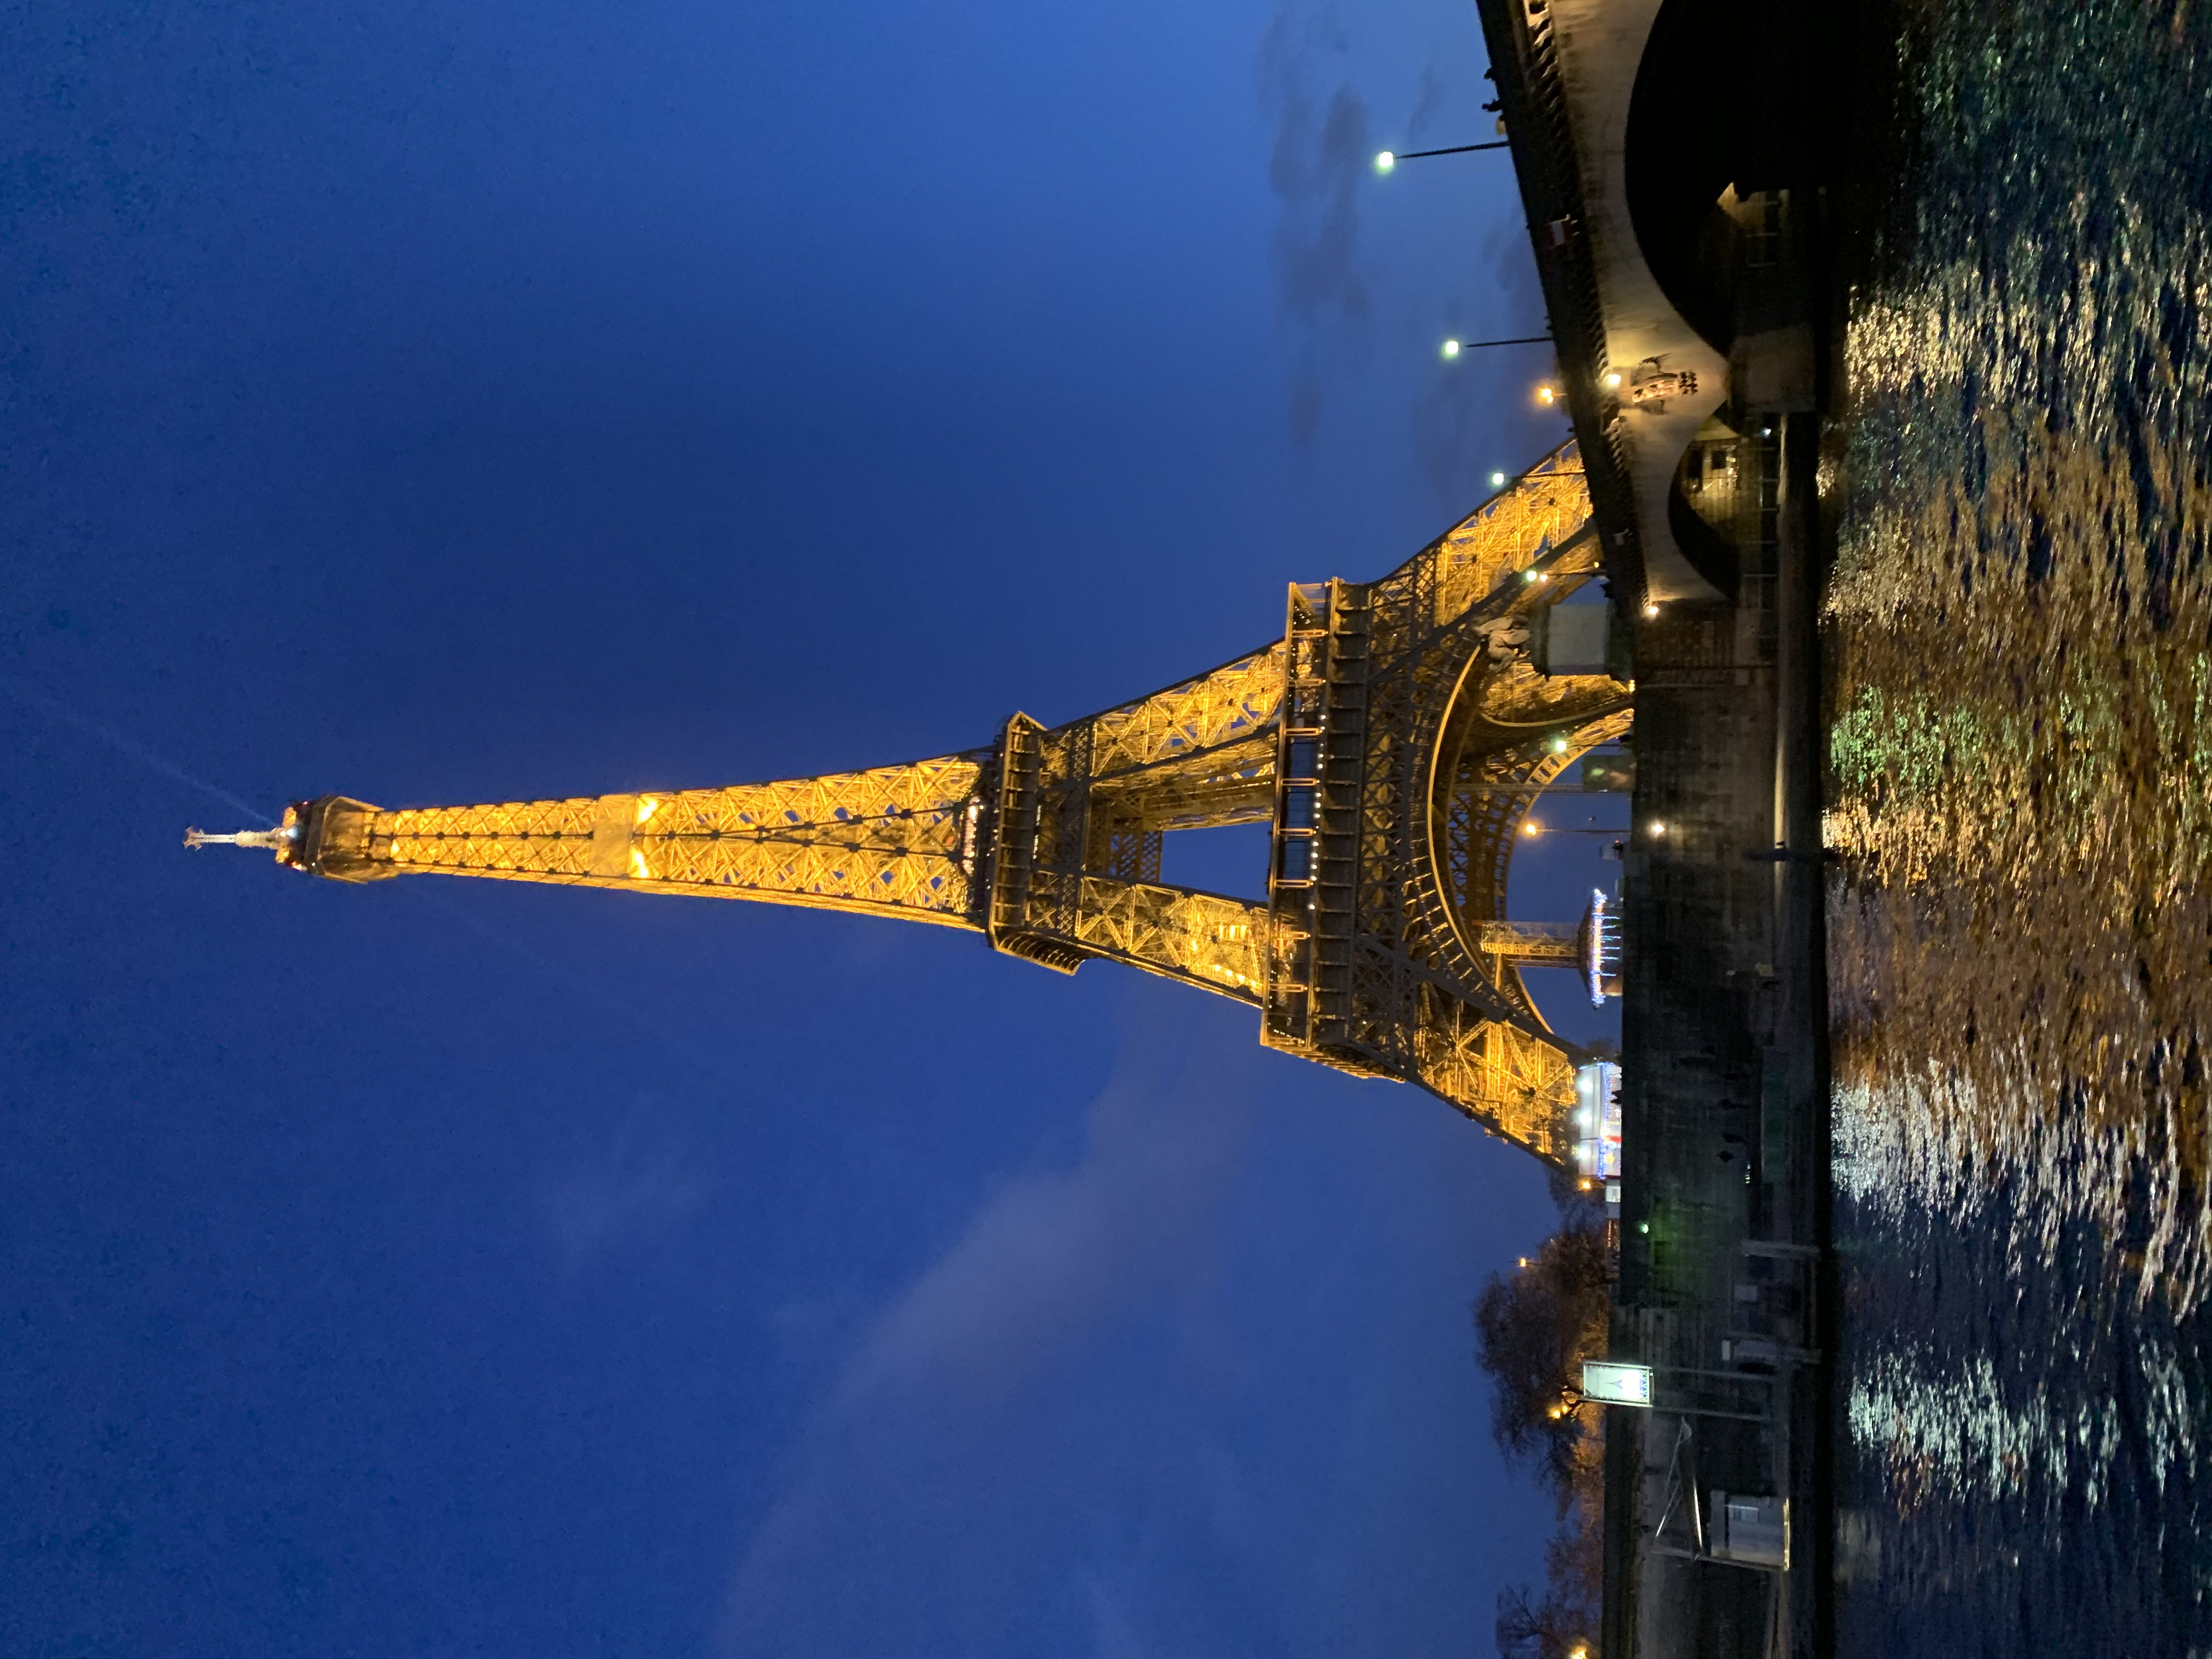 Eiffel Tower in December